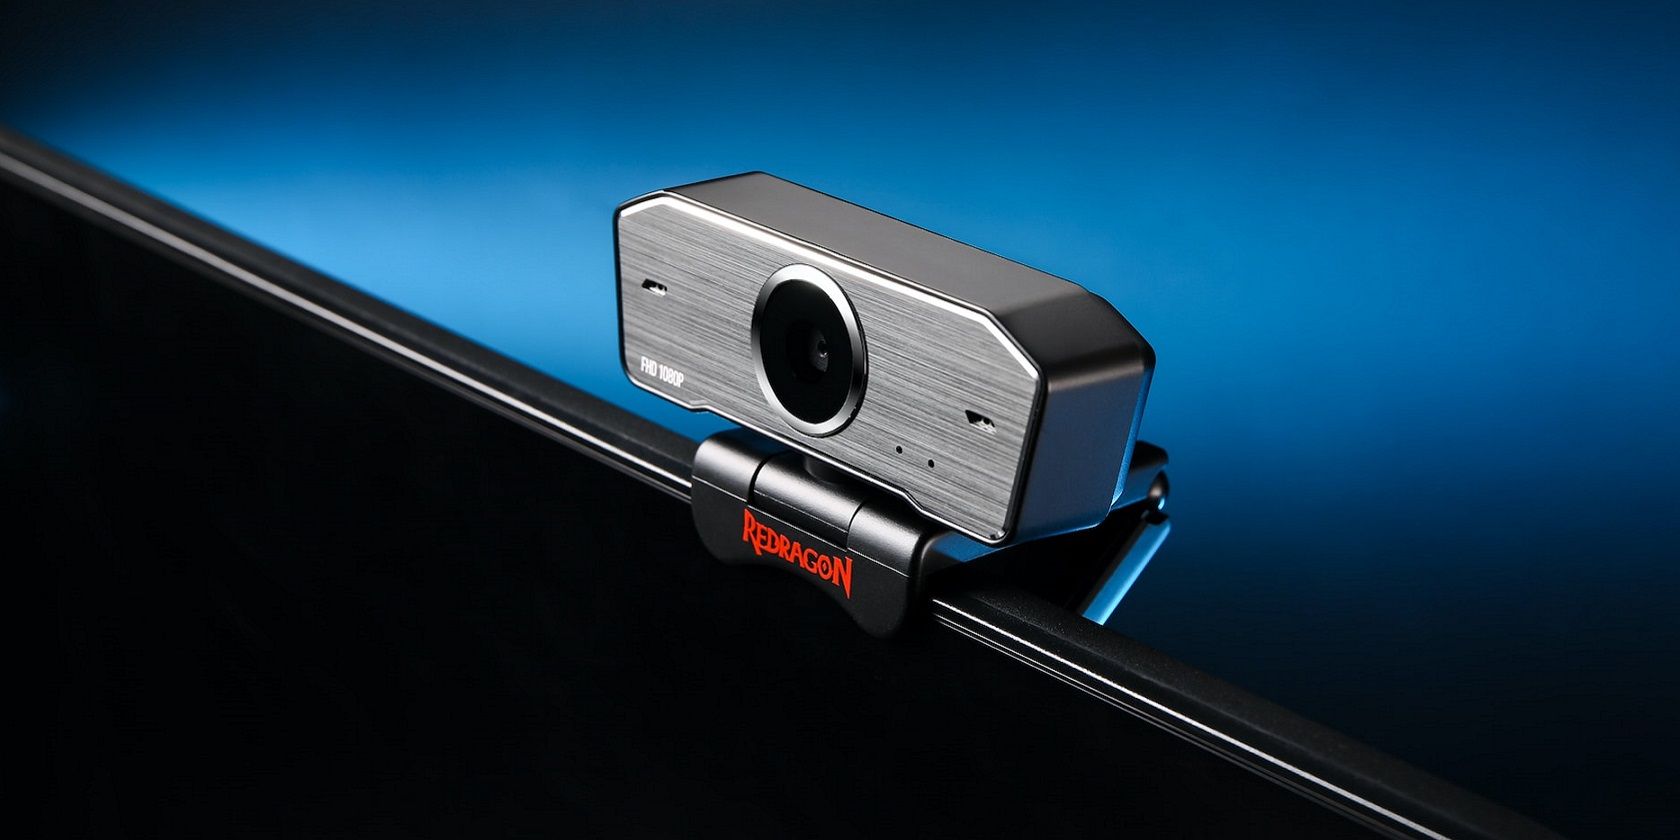 A webcam device